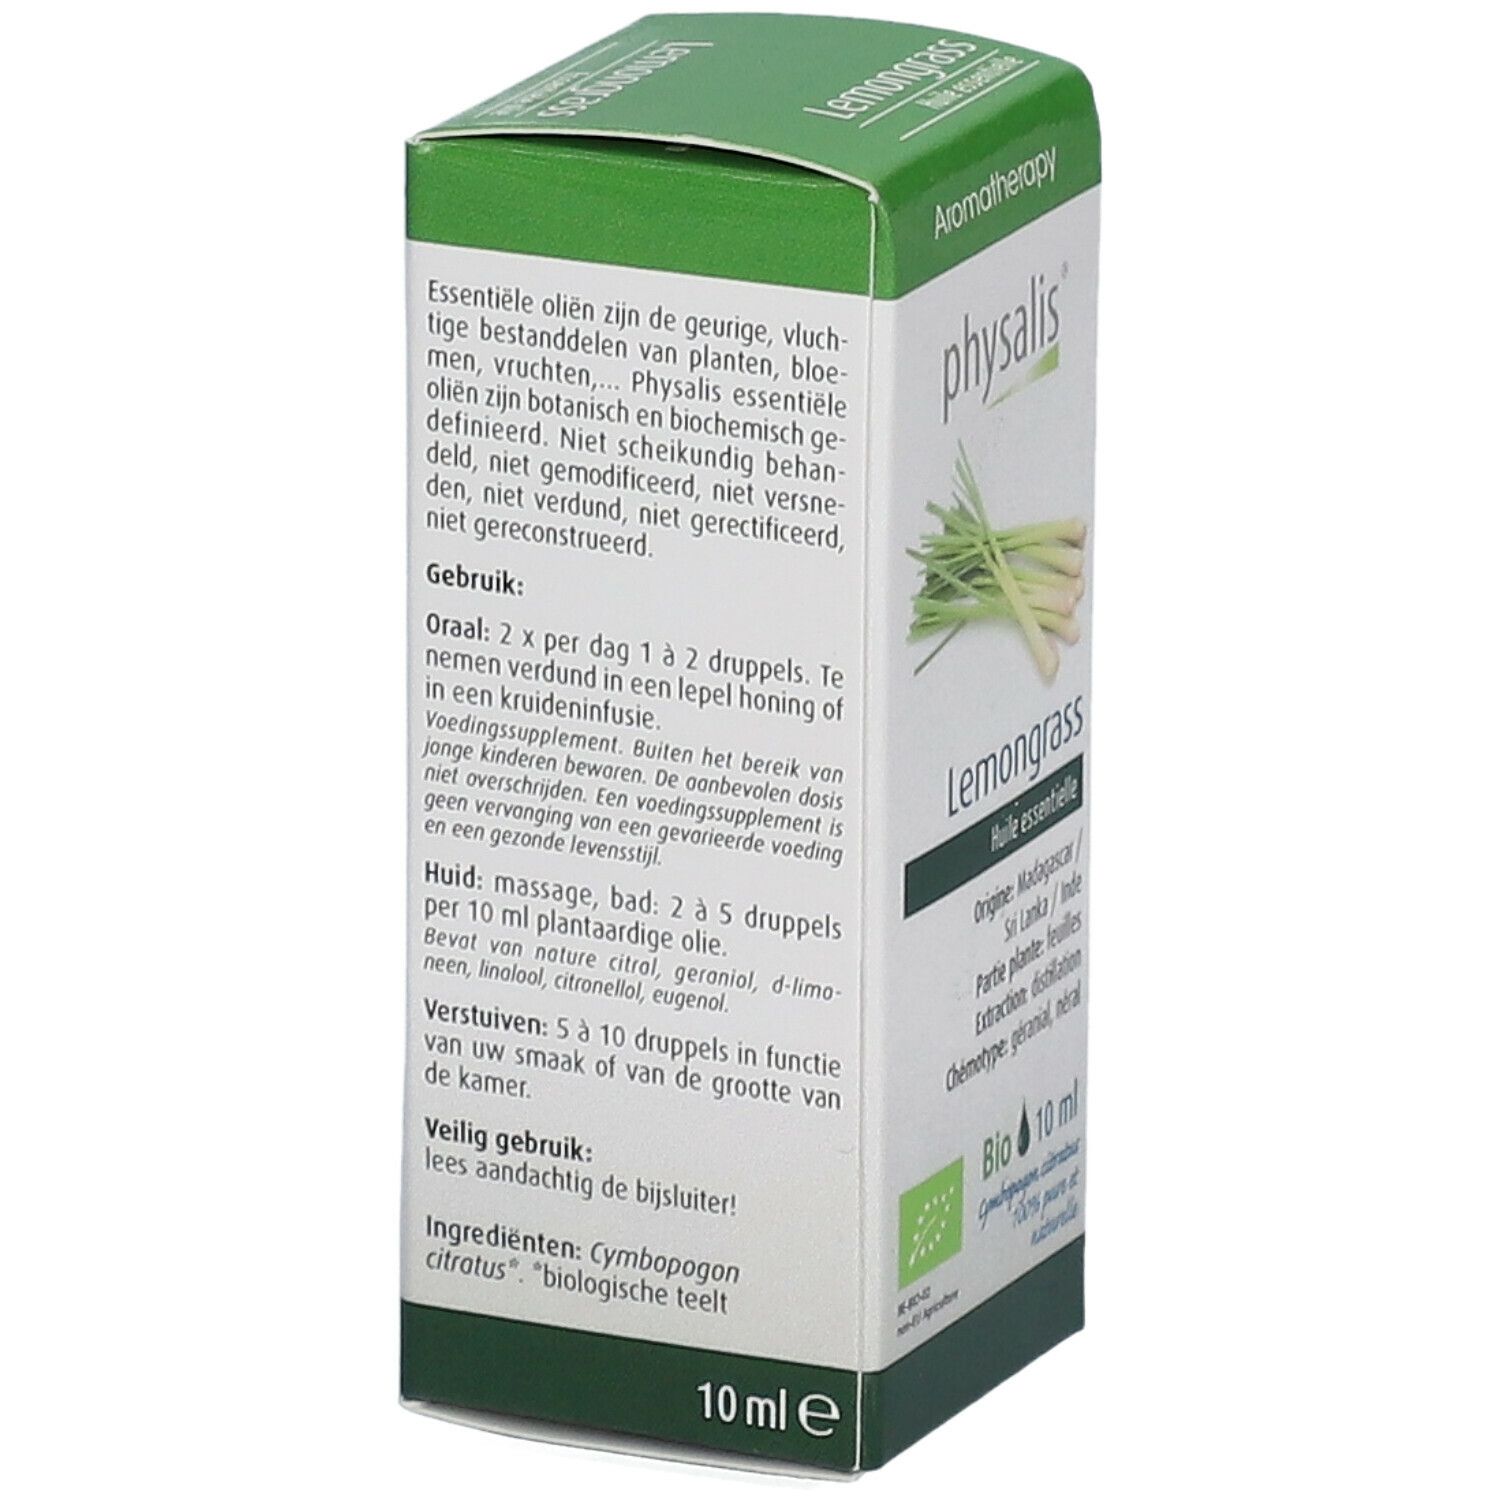 Physalis® Lemongrass Huile essentielle Bio